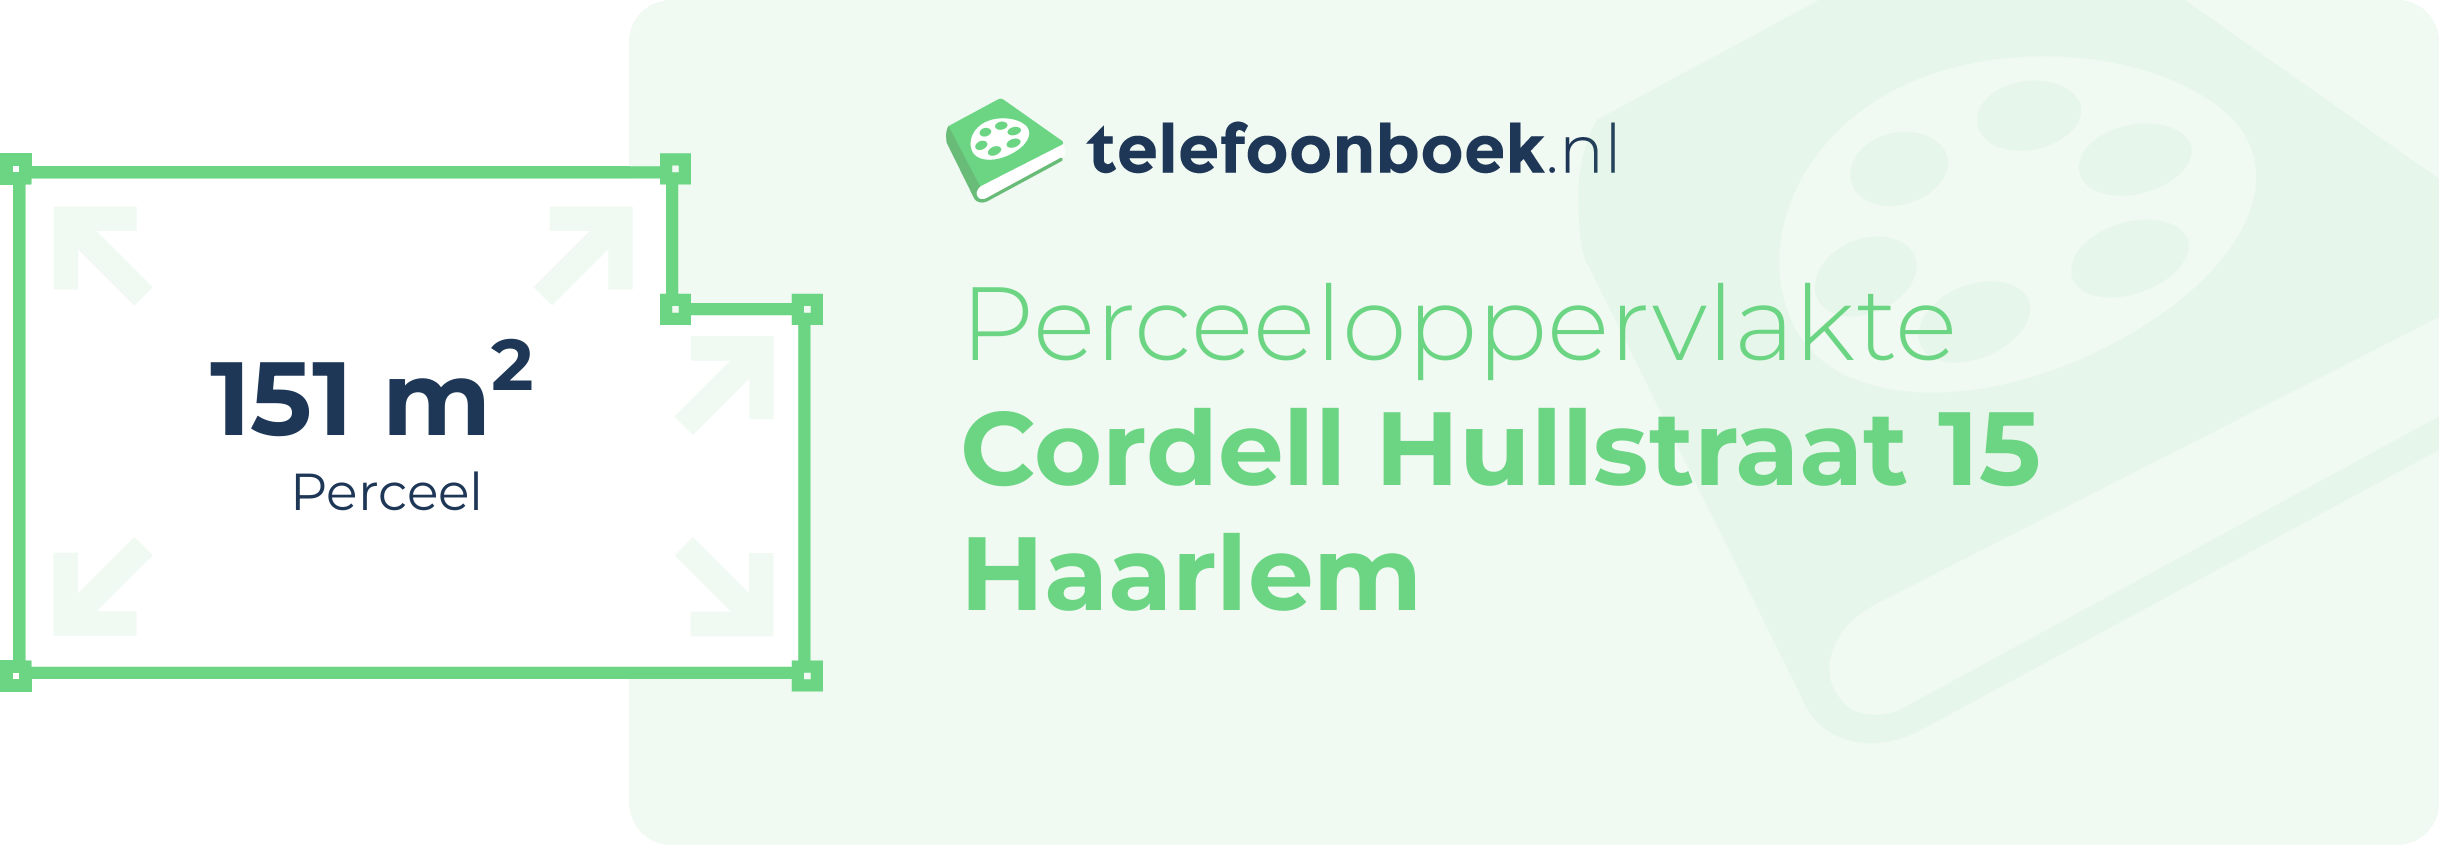 Perceeloppervlakte Cordell Hullstraat 15 Haarlem